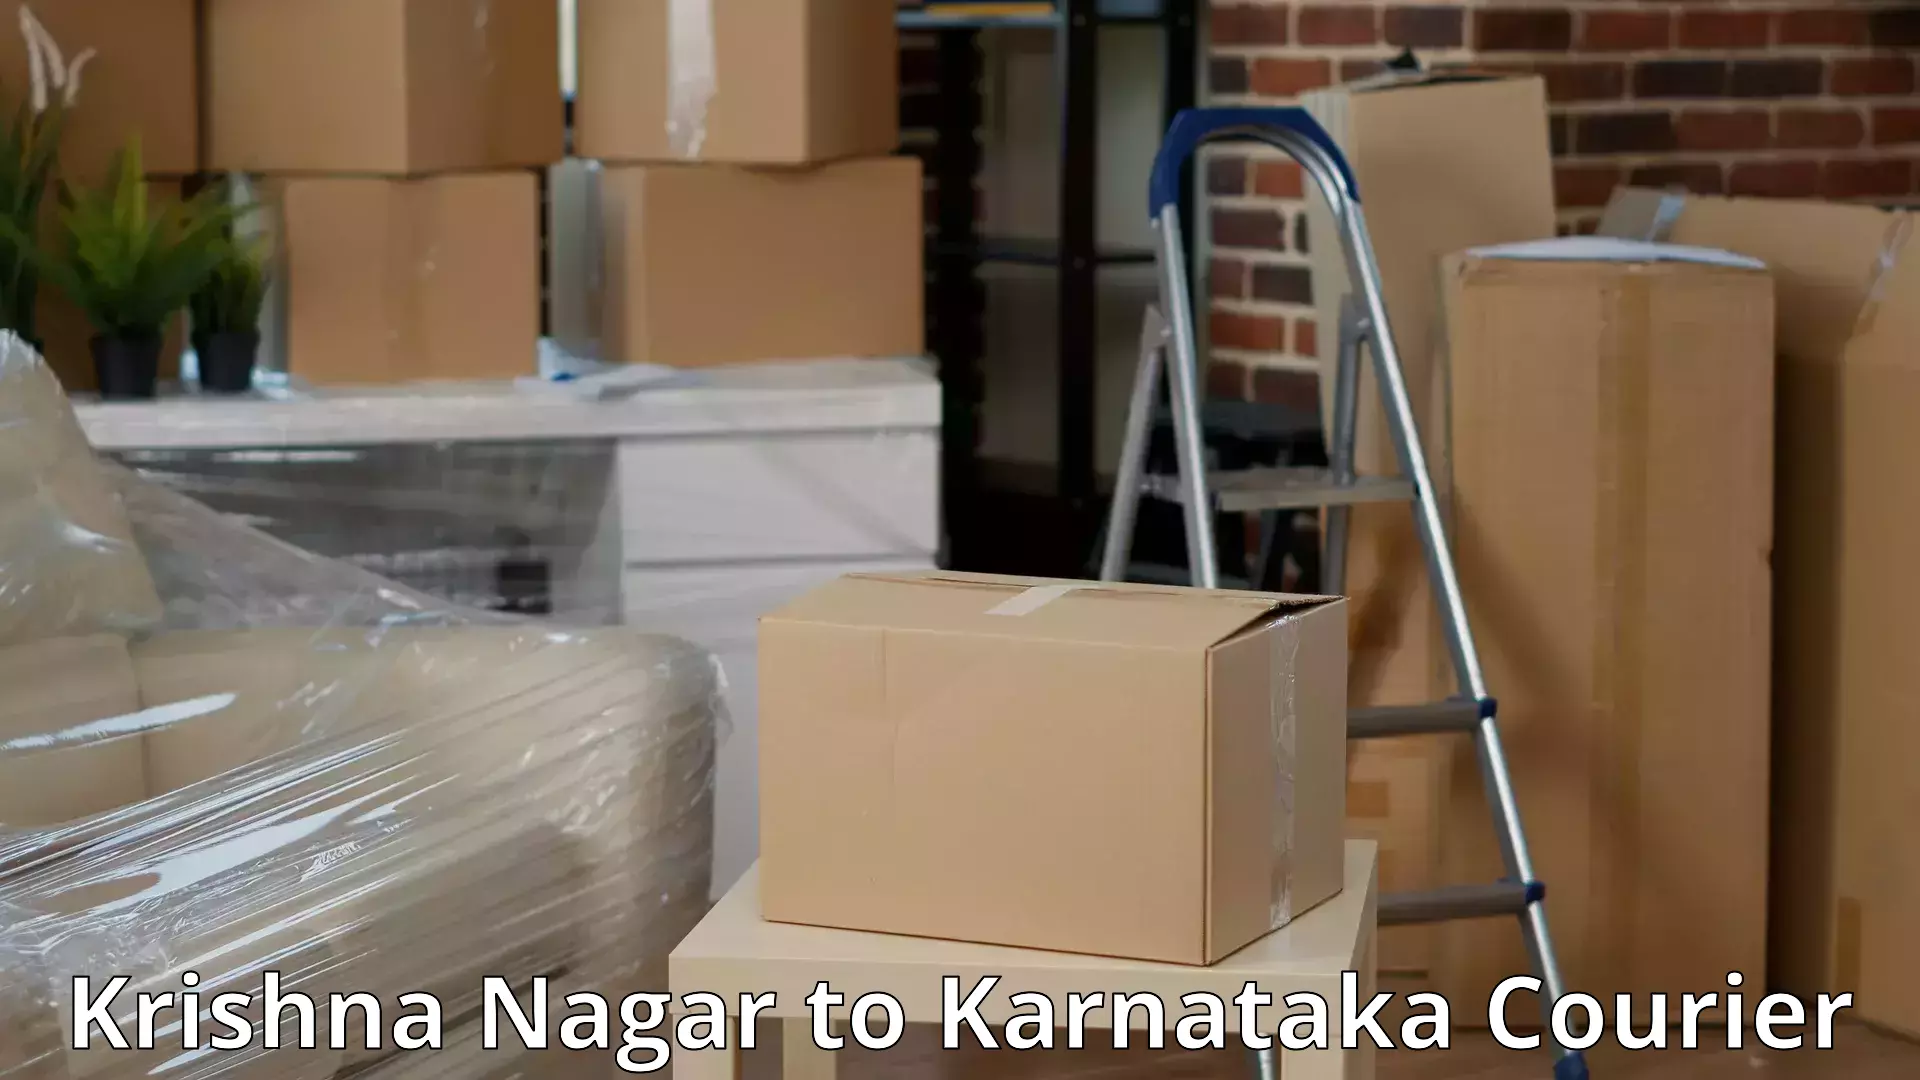 Professional moving assistance Krishna Nagar to Sirsi